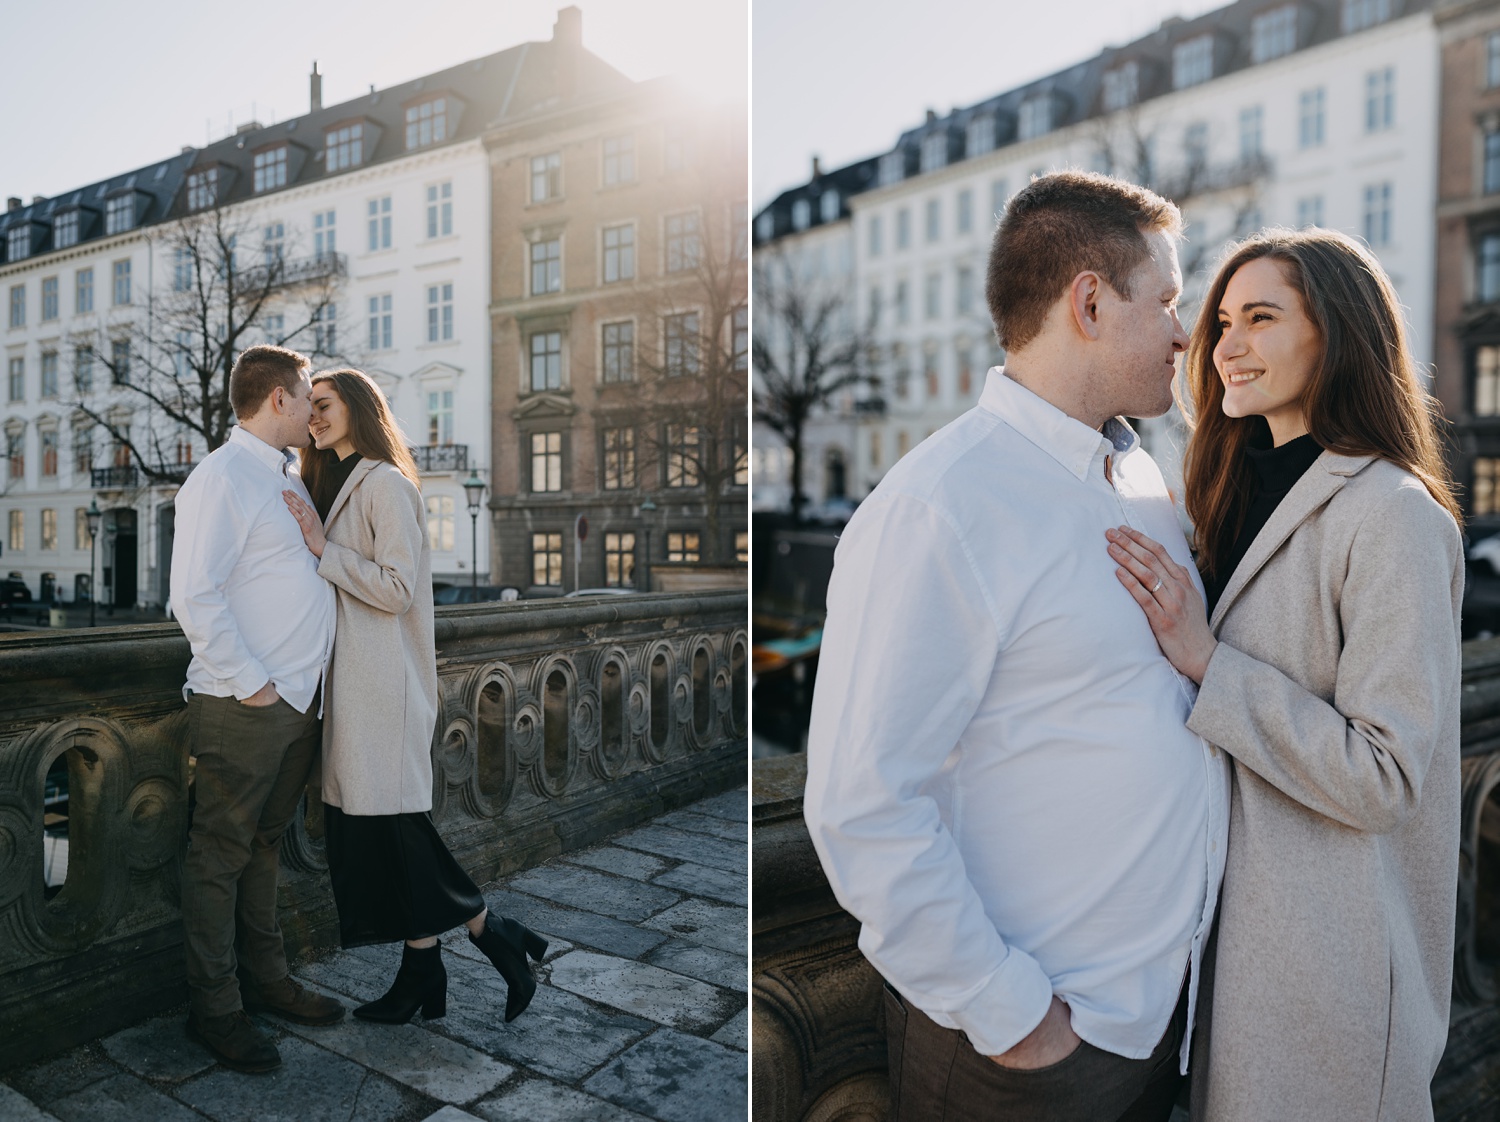 surprise proposal in Copenhagen's charming streets